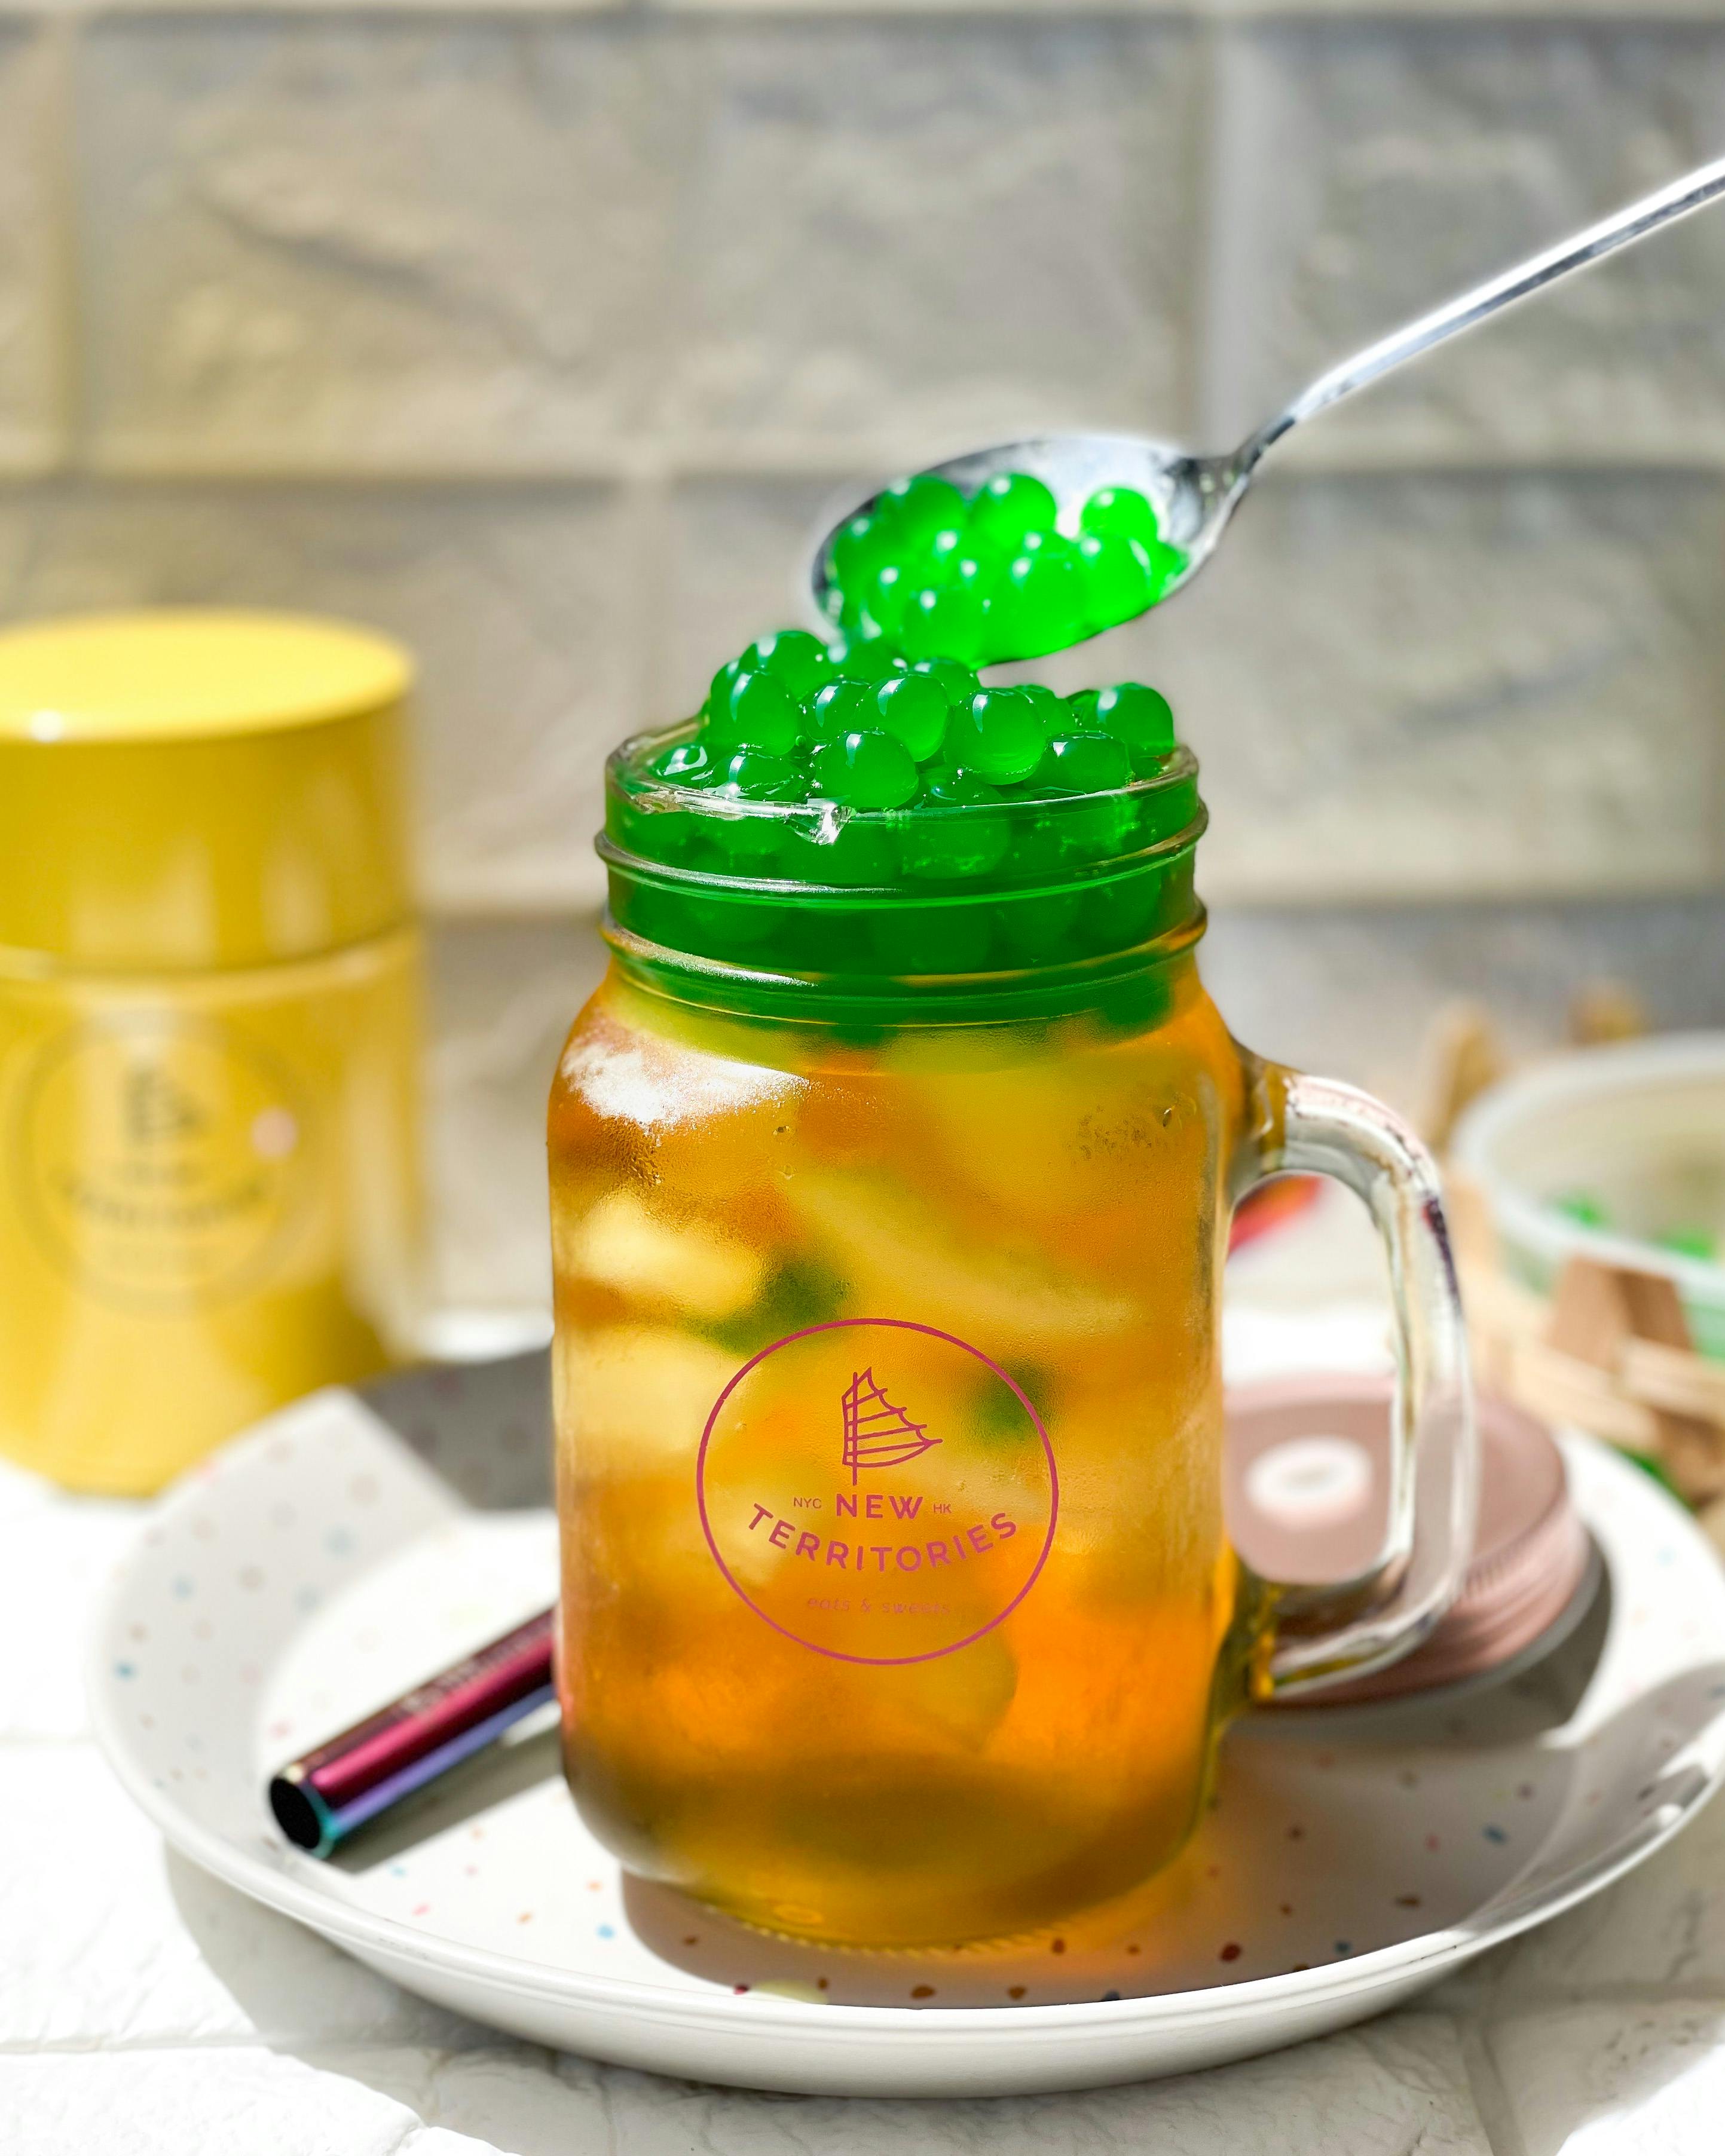 Bubble Tea Kit Gift Set Popping Boba, Bubble Tea Powder, Cups and Gift Bag Boba  Tea Gifts 6 Servings 